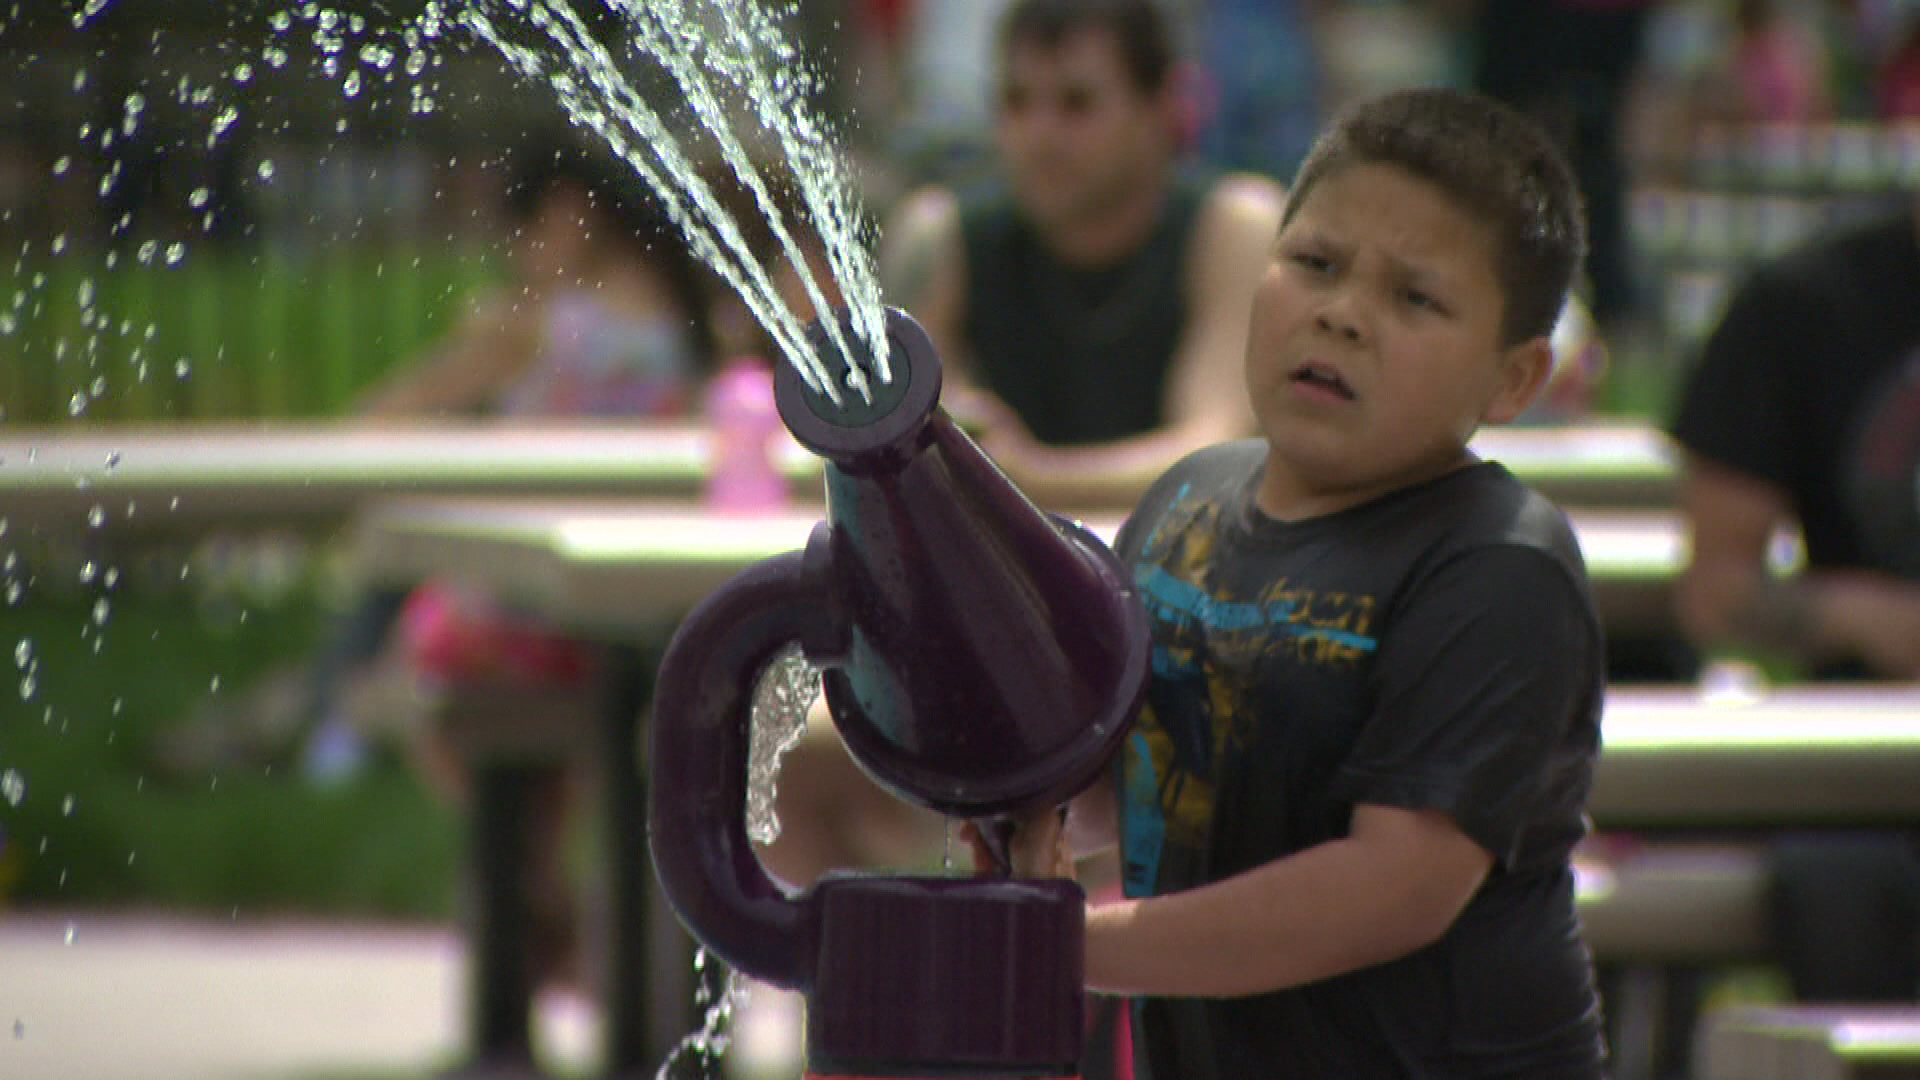 Winnipeg embraces final summer fling as Labour Day weekend marks back-to-school countdown